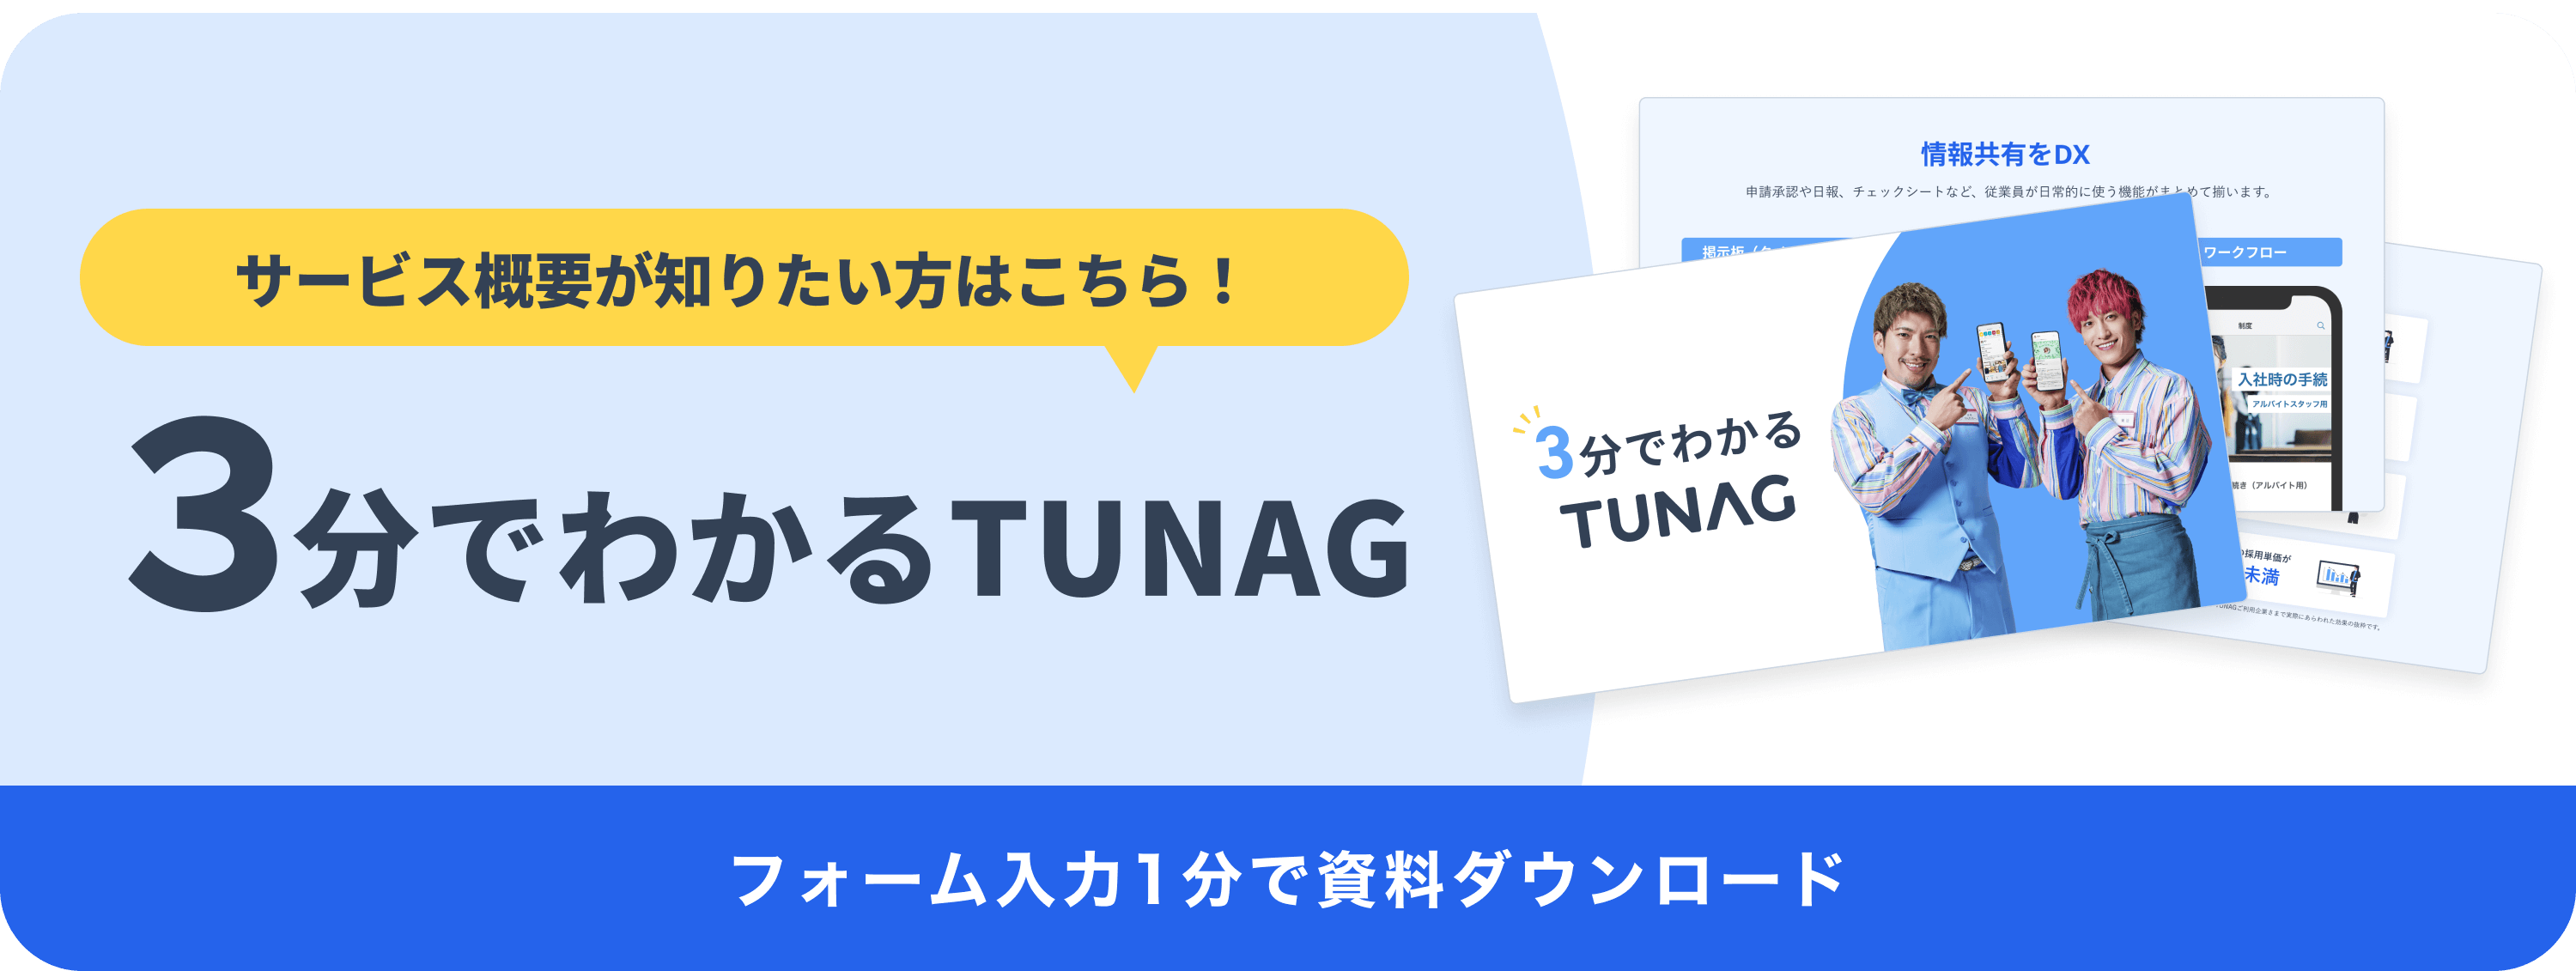 TUNAGサービス資料